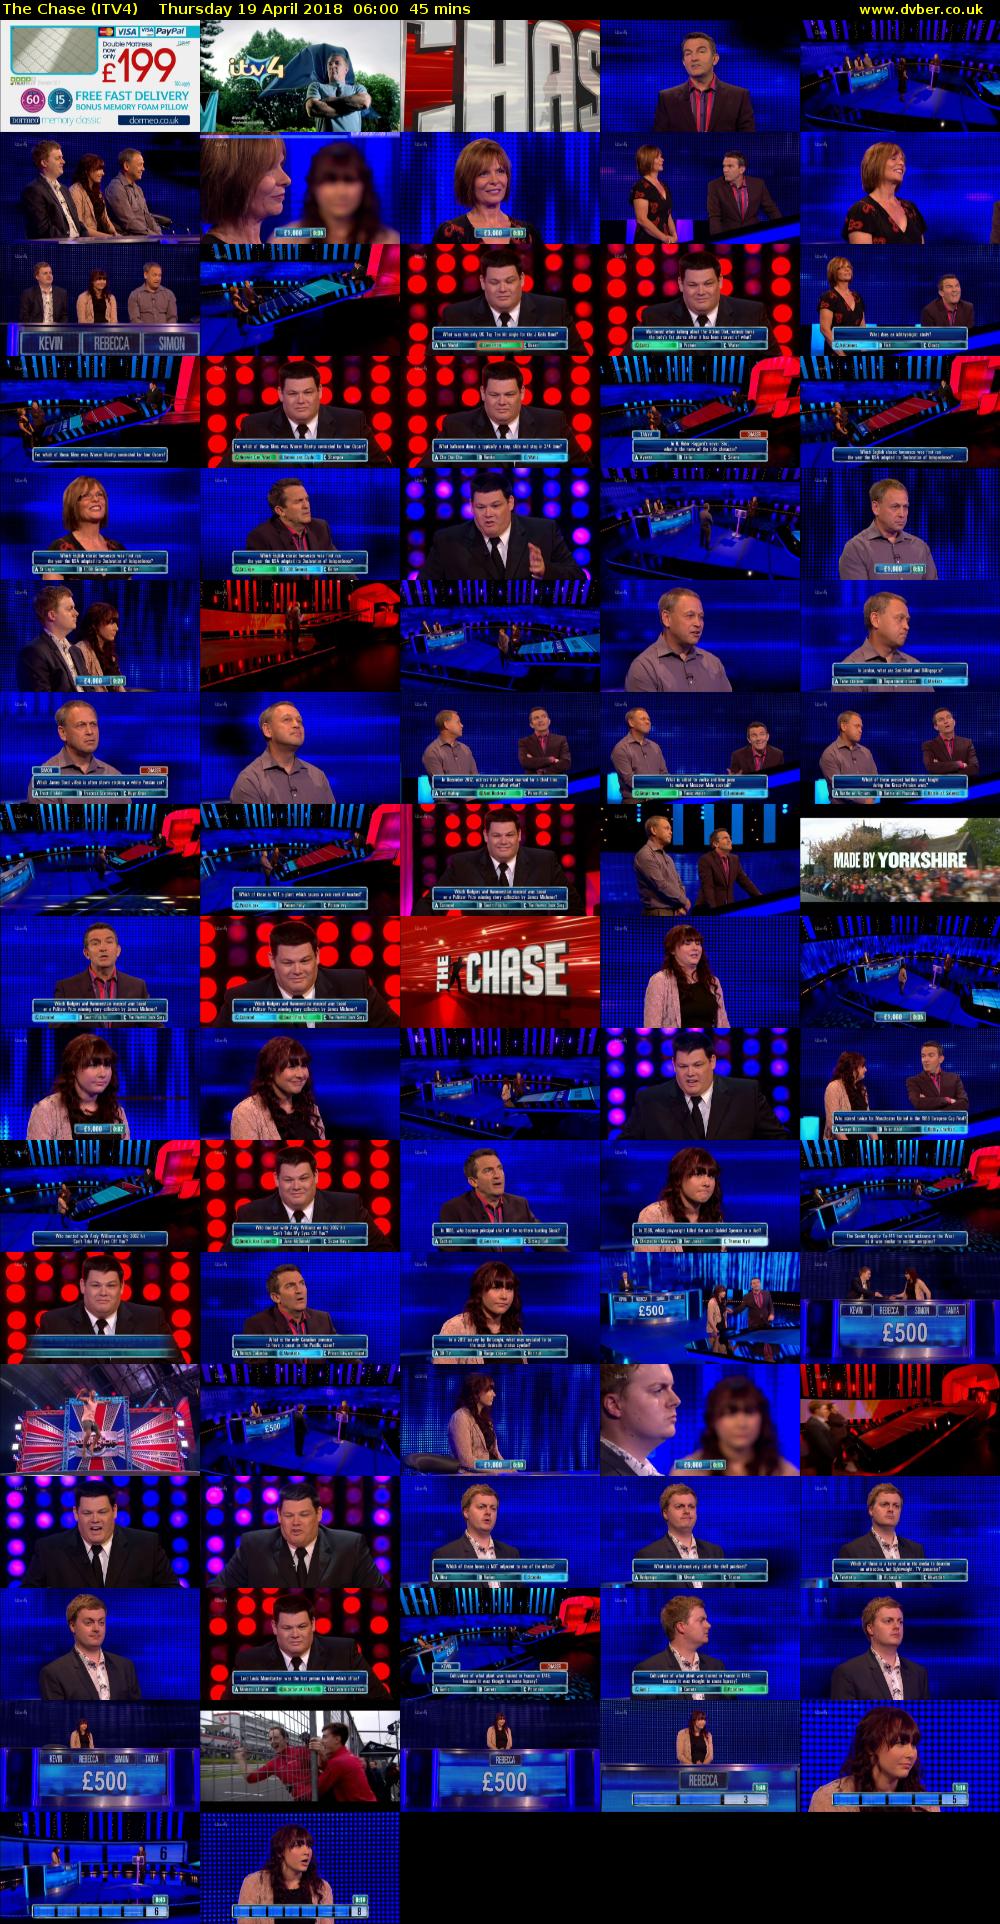 The Chase (ITV4) Thursday 19 April 2018 06:00 - 06:45